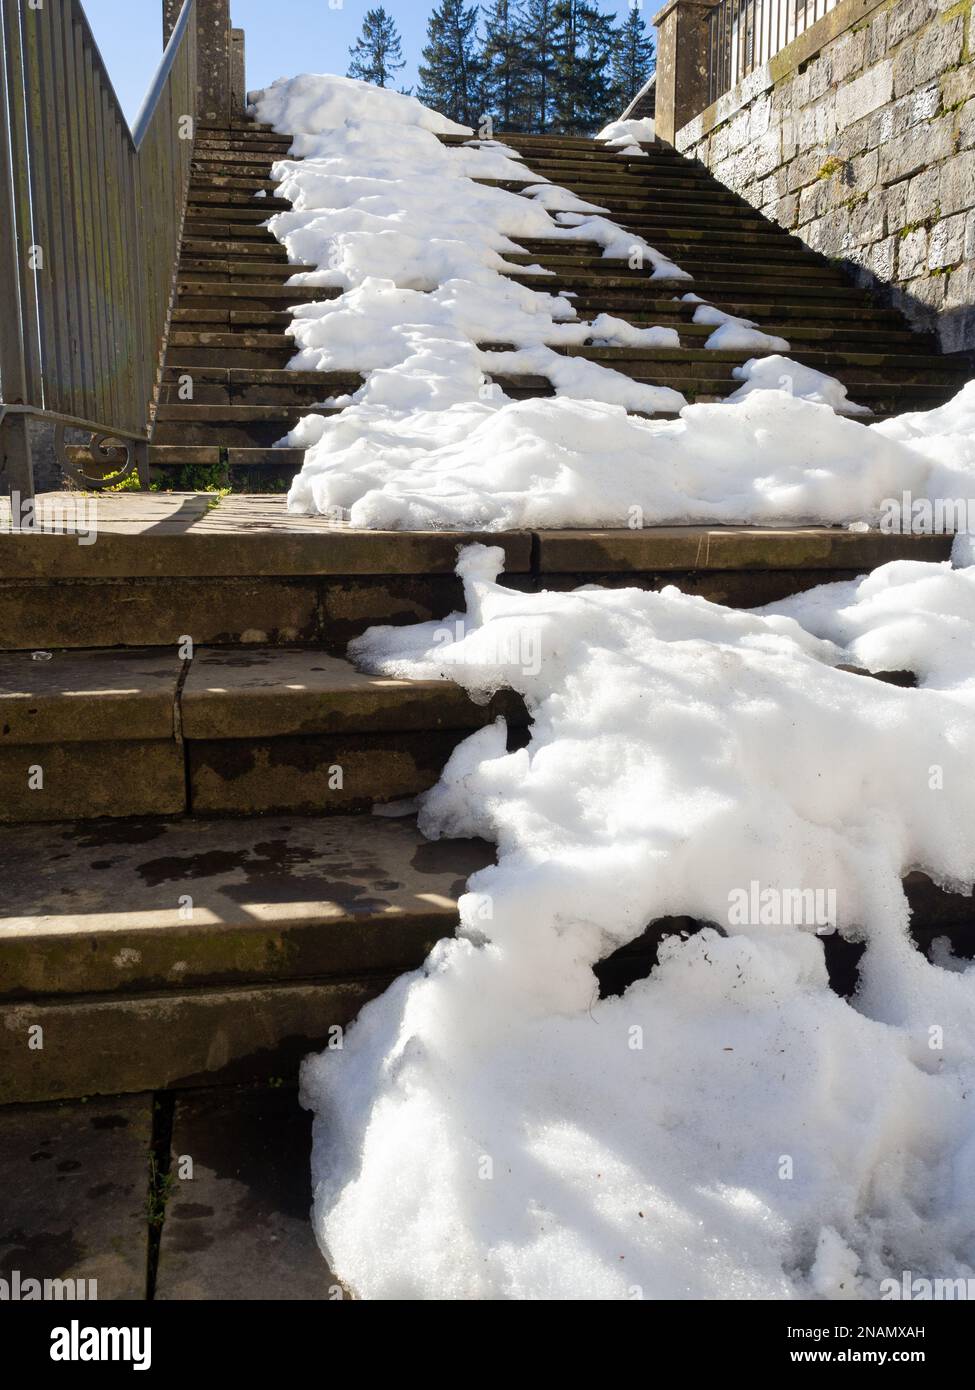 Snow storm stone stairs with snow Stock Photo